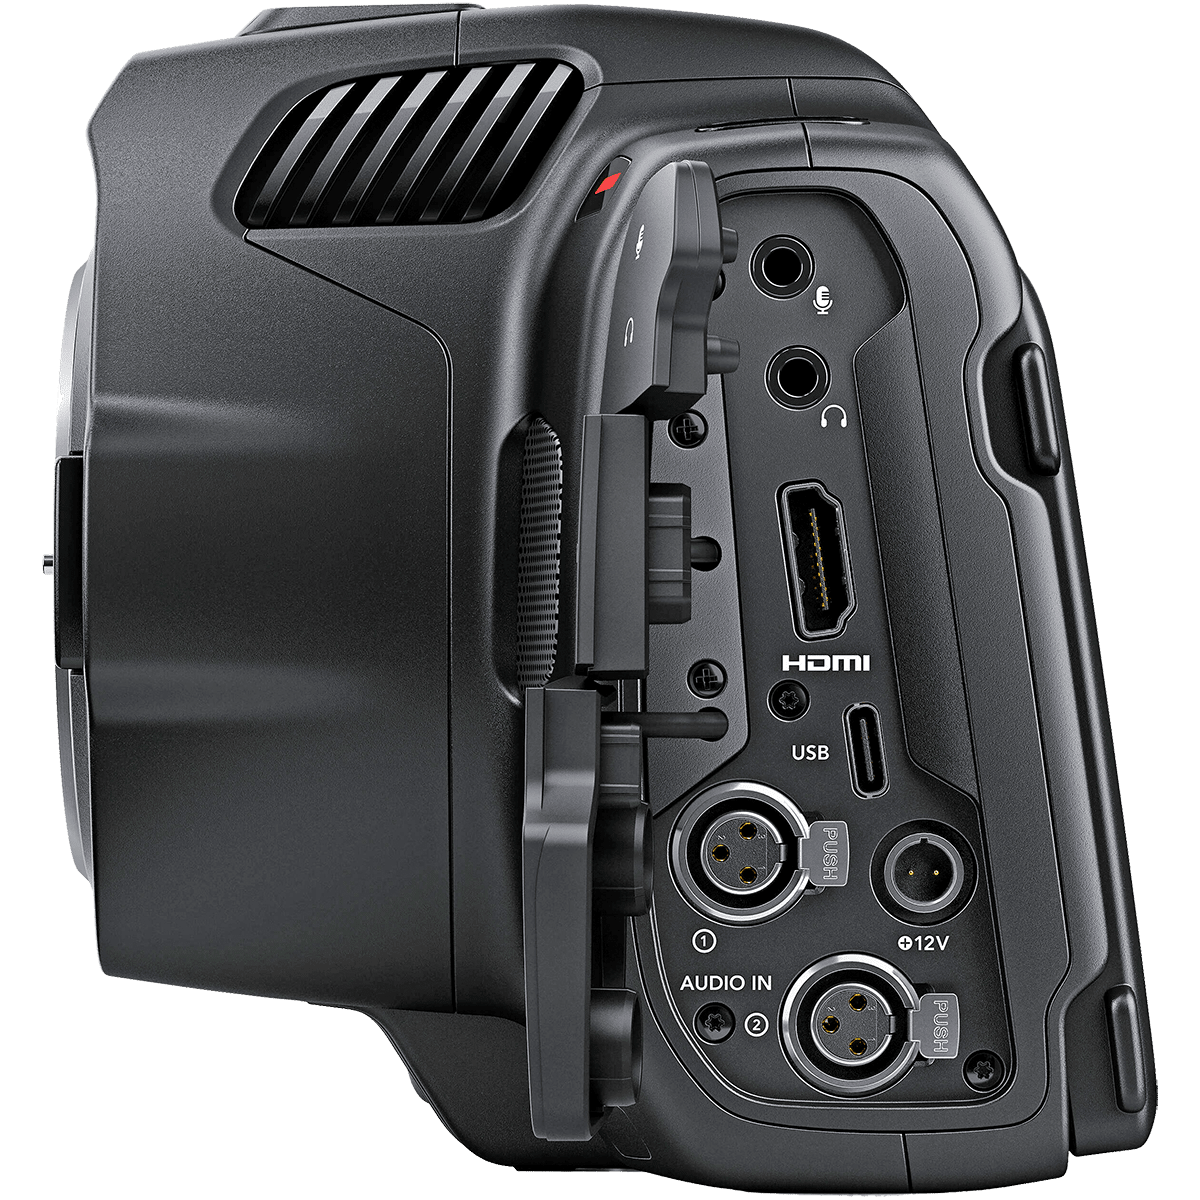 Камера Blackmagic Pocket Cinema Camera 6K PRO (EF)